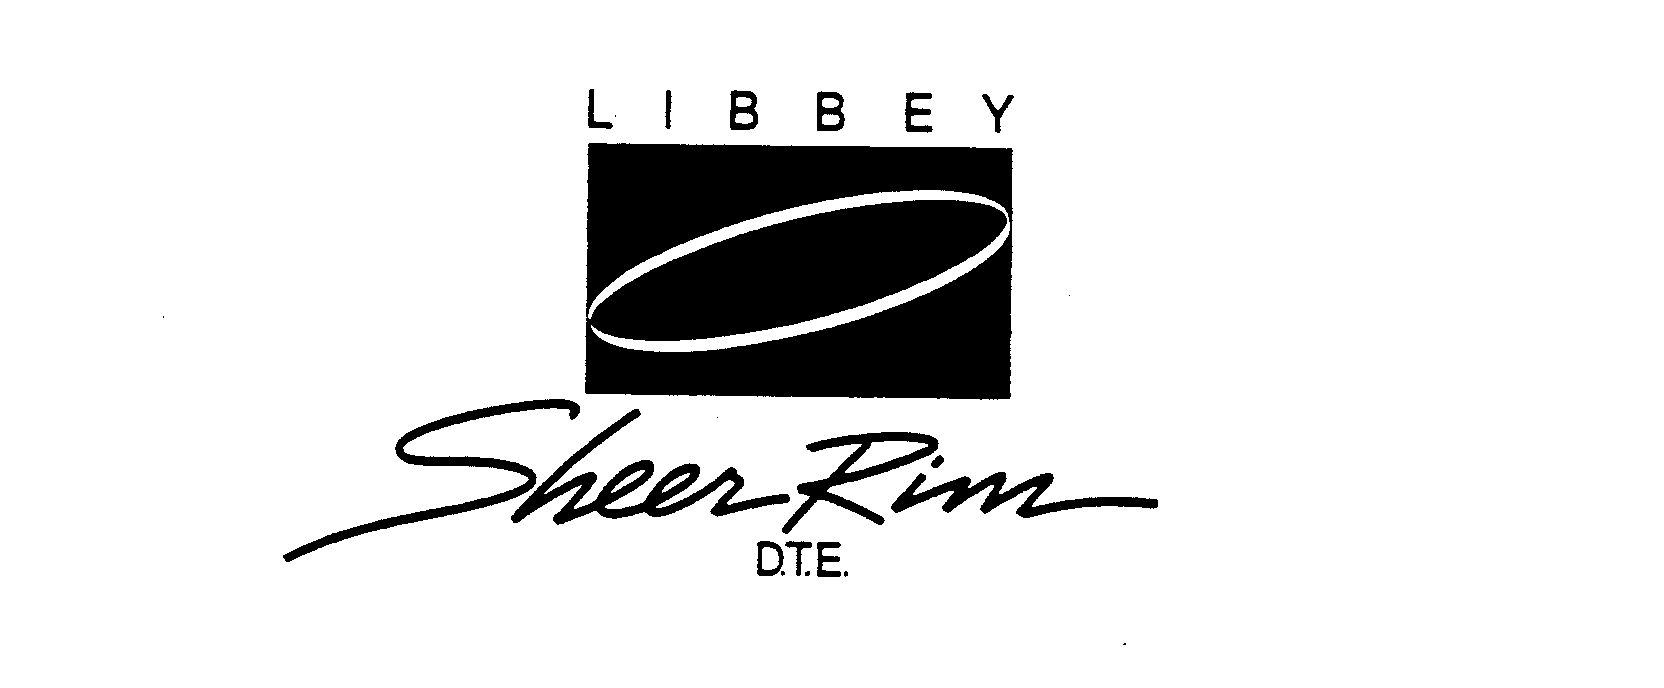  LIBBEY SHEER RIM D.T.E.